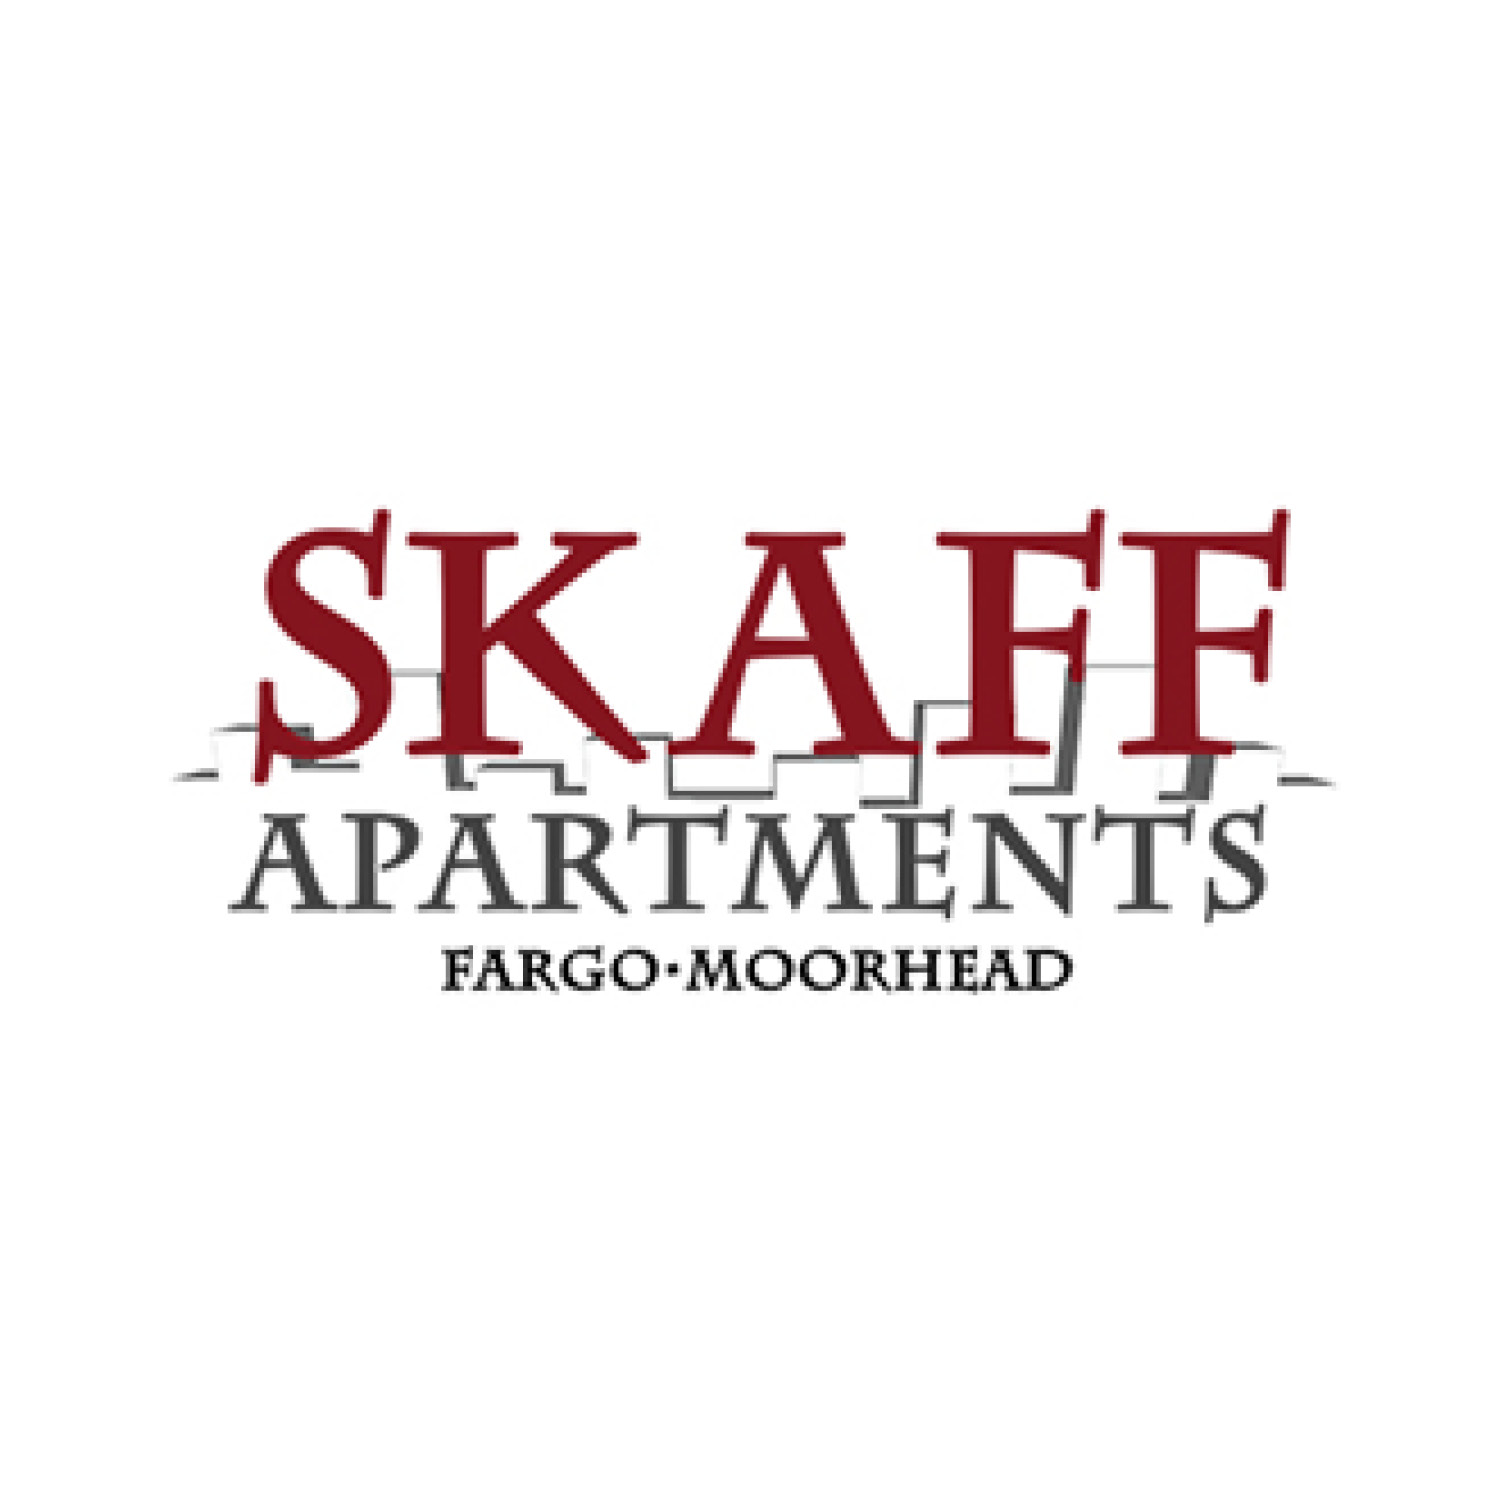 Skaff Apartments